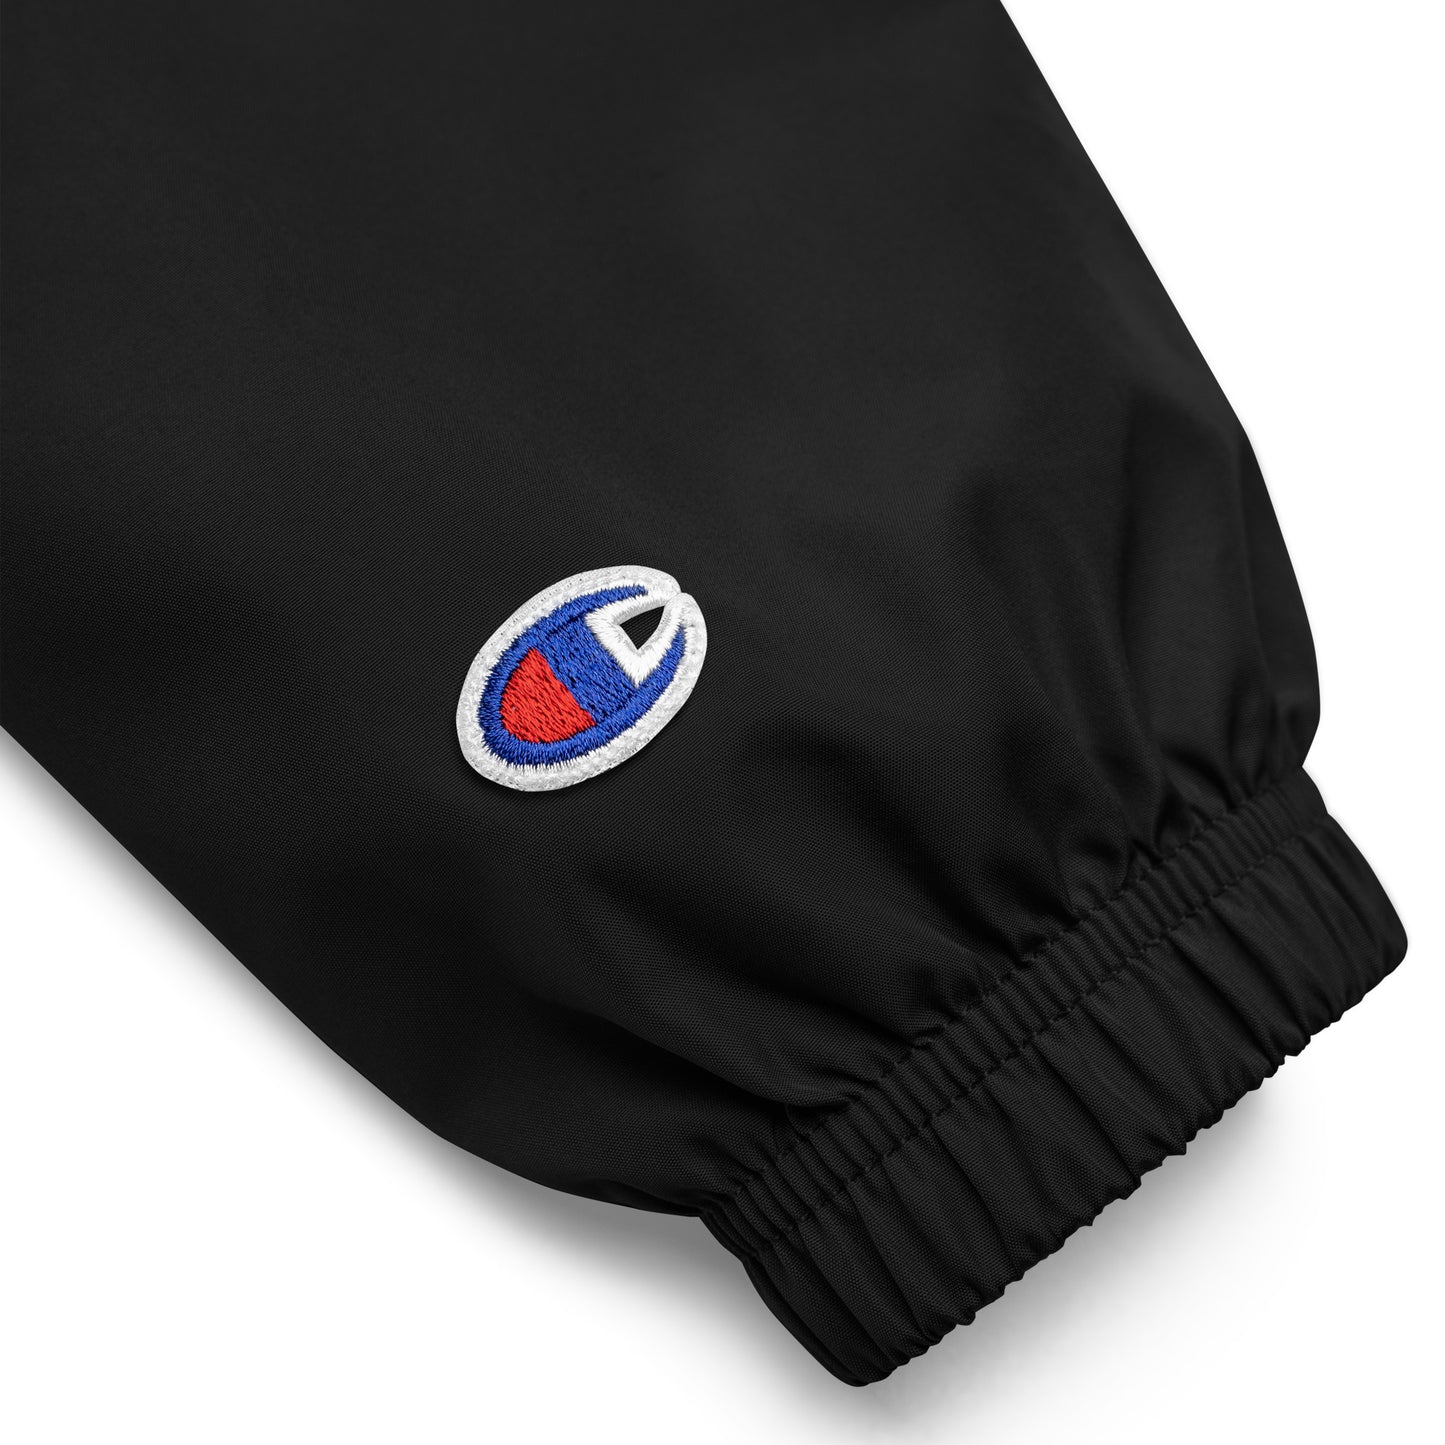 Embroidered Packable Jacket - Wash Rack Pullover Jacket